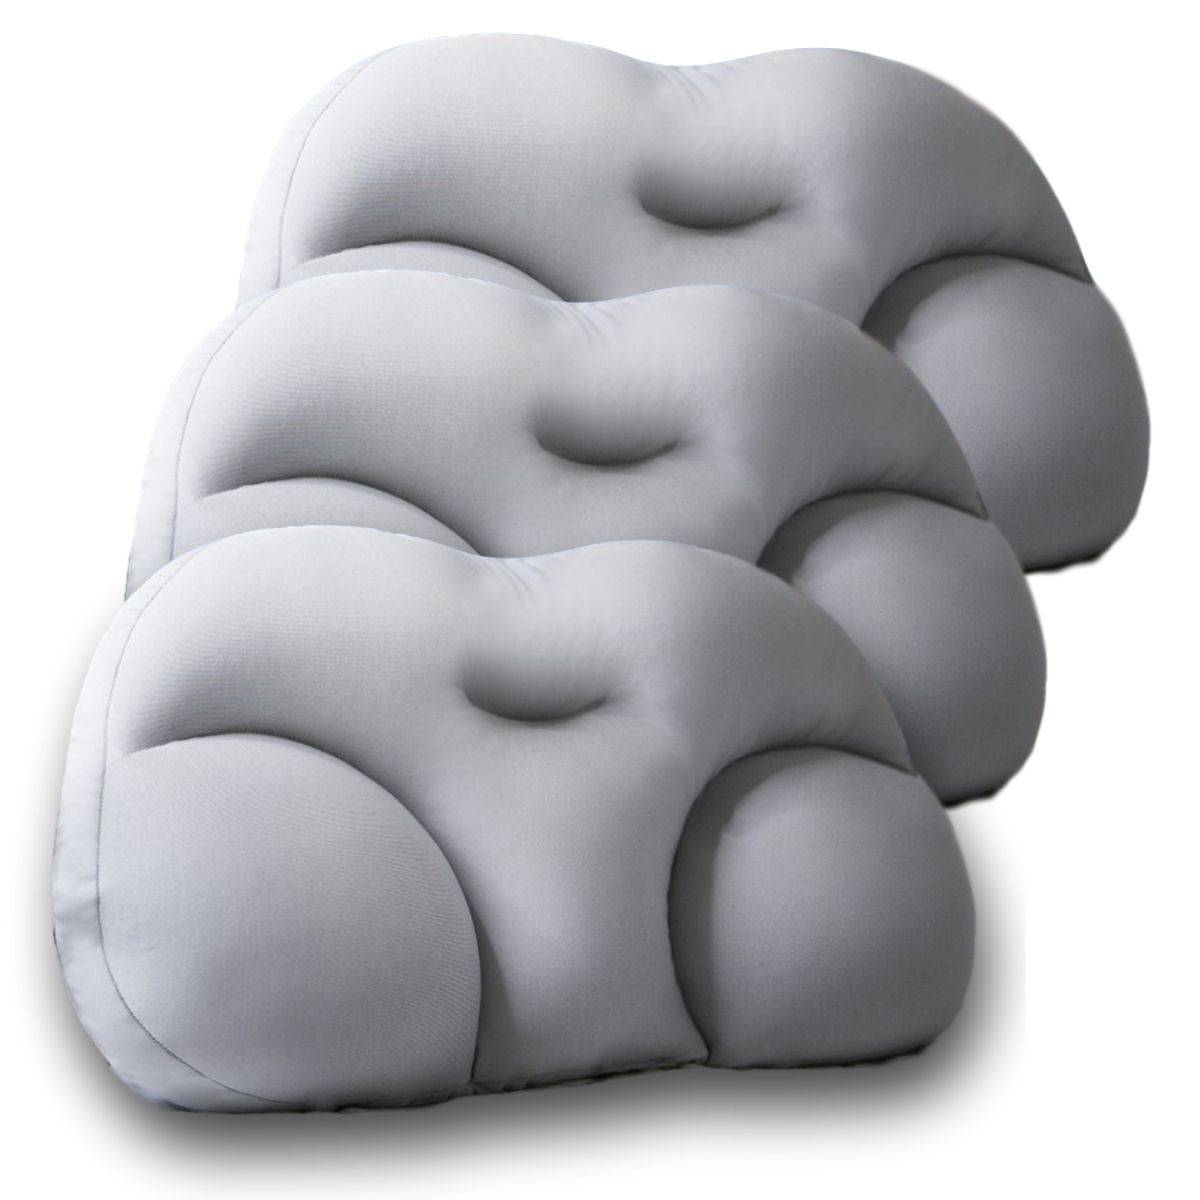 memory foam pillow, sleep pillow for neck pain relief